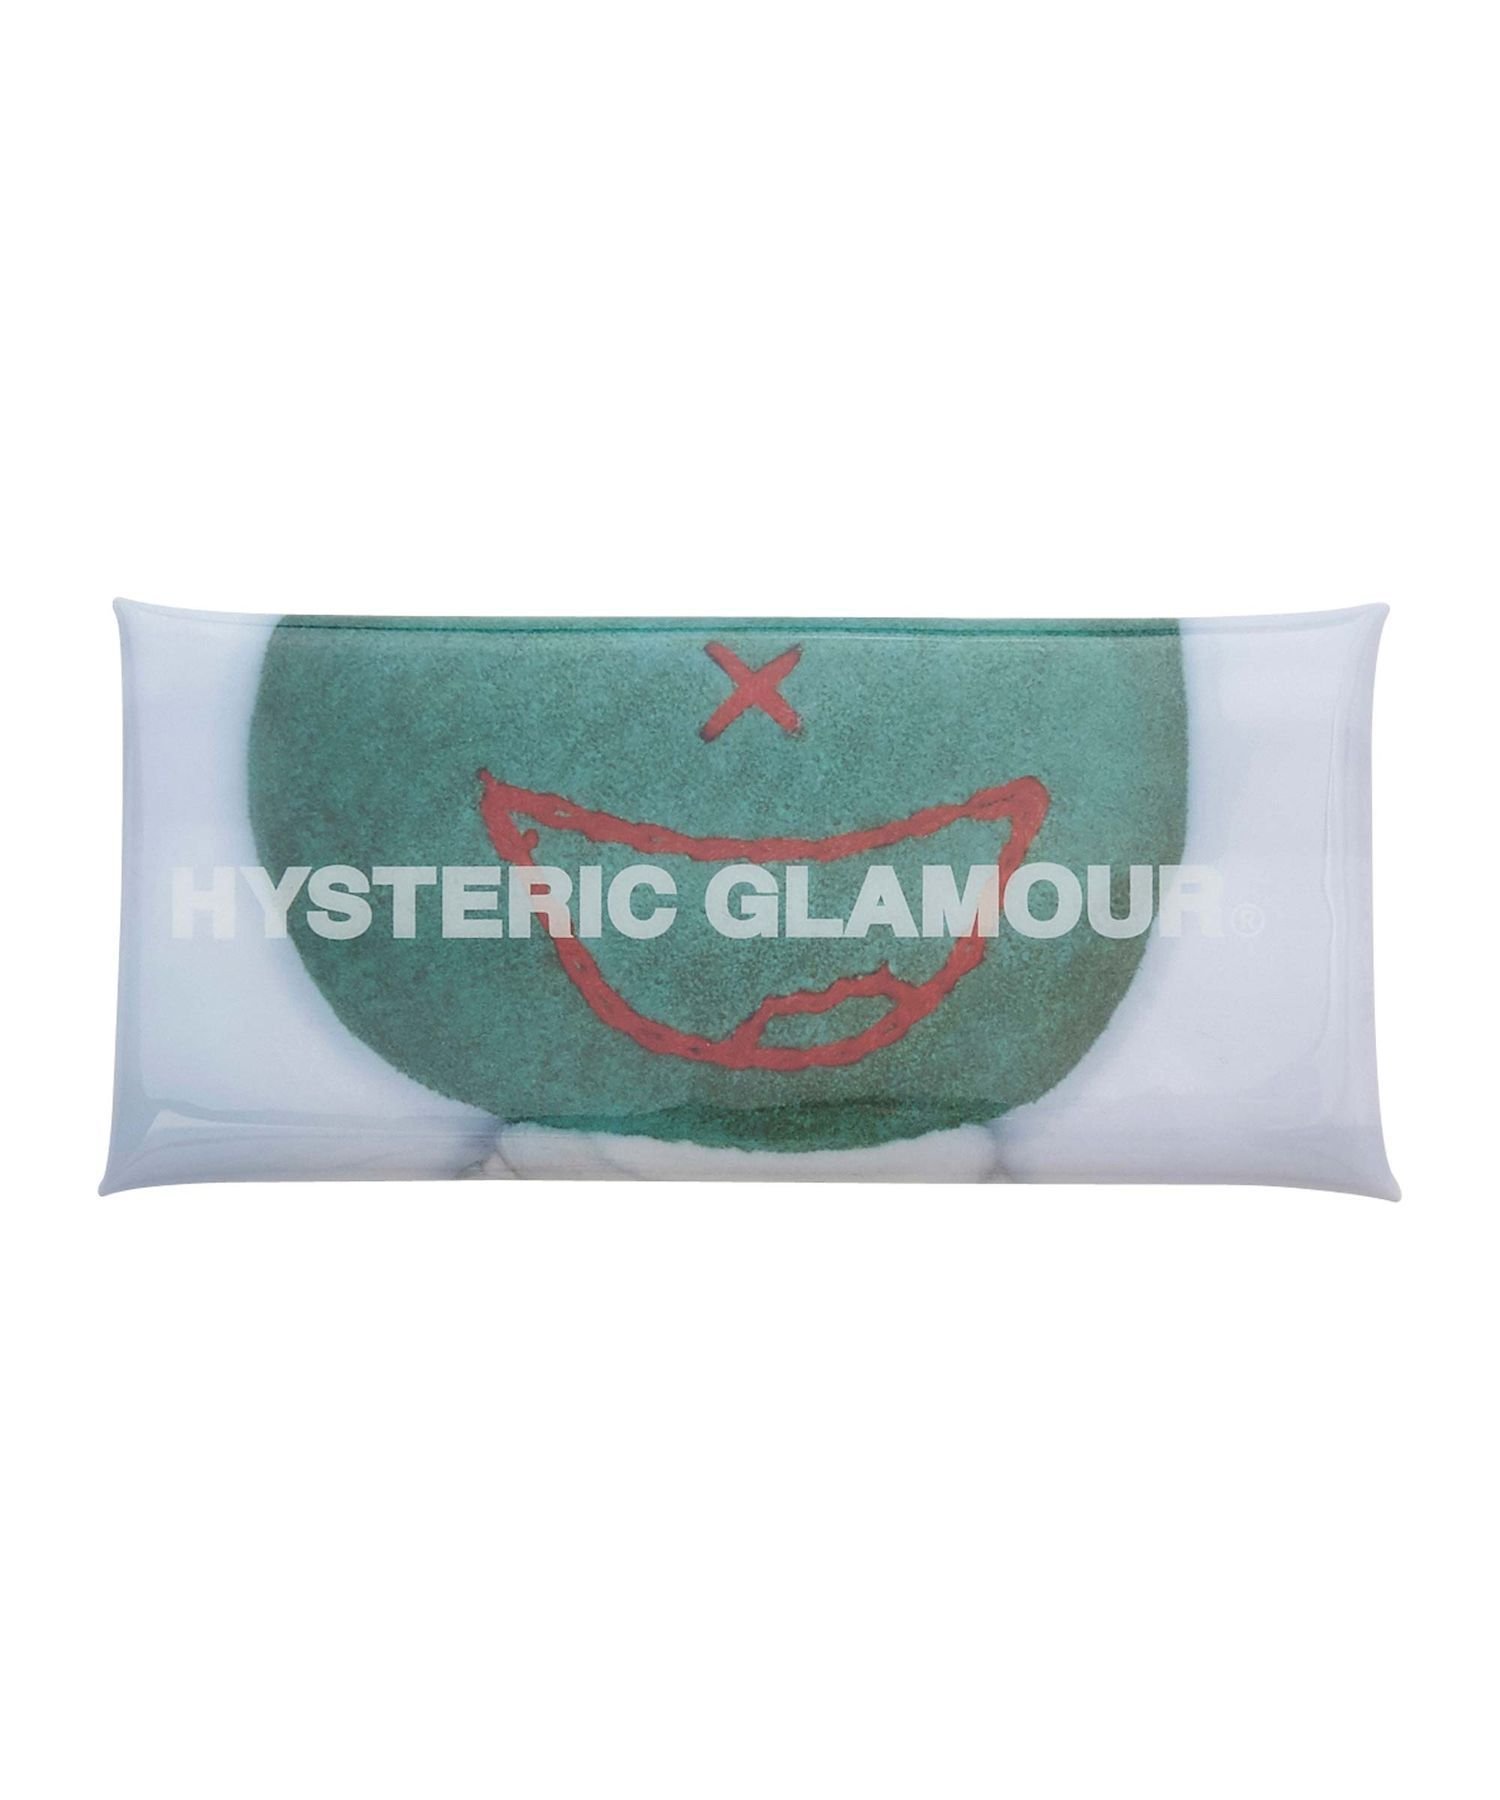 HYSTERIC GLAMOUR PVCマルチケース ヒステリックグラマー 財布 ポーチ ケース ポーチ ホワイト イエロー